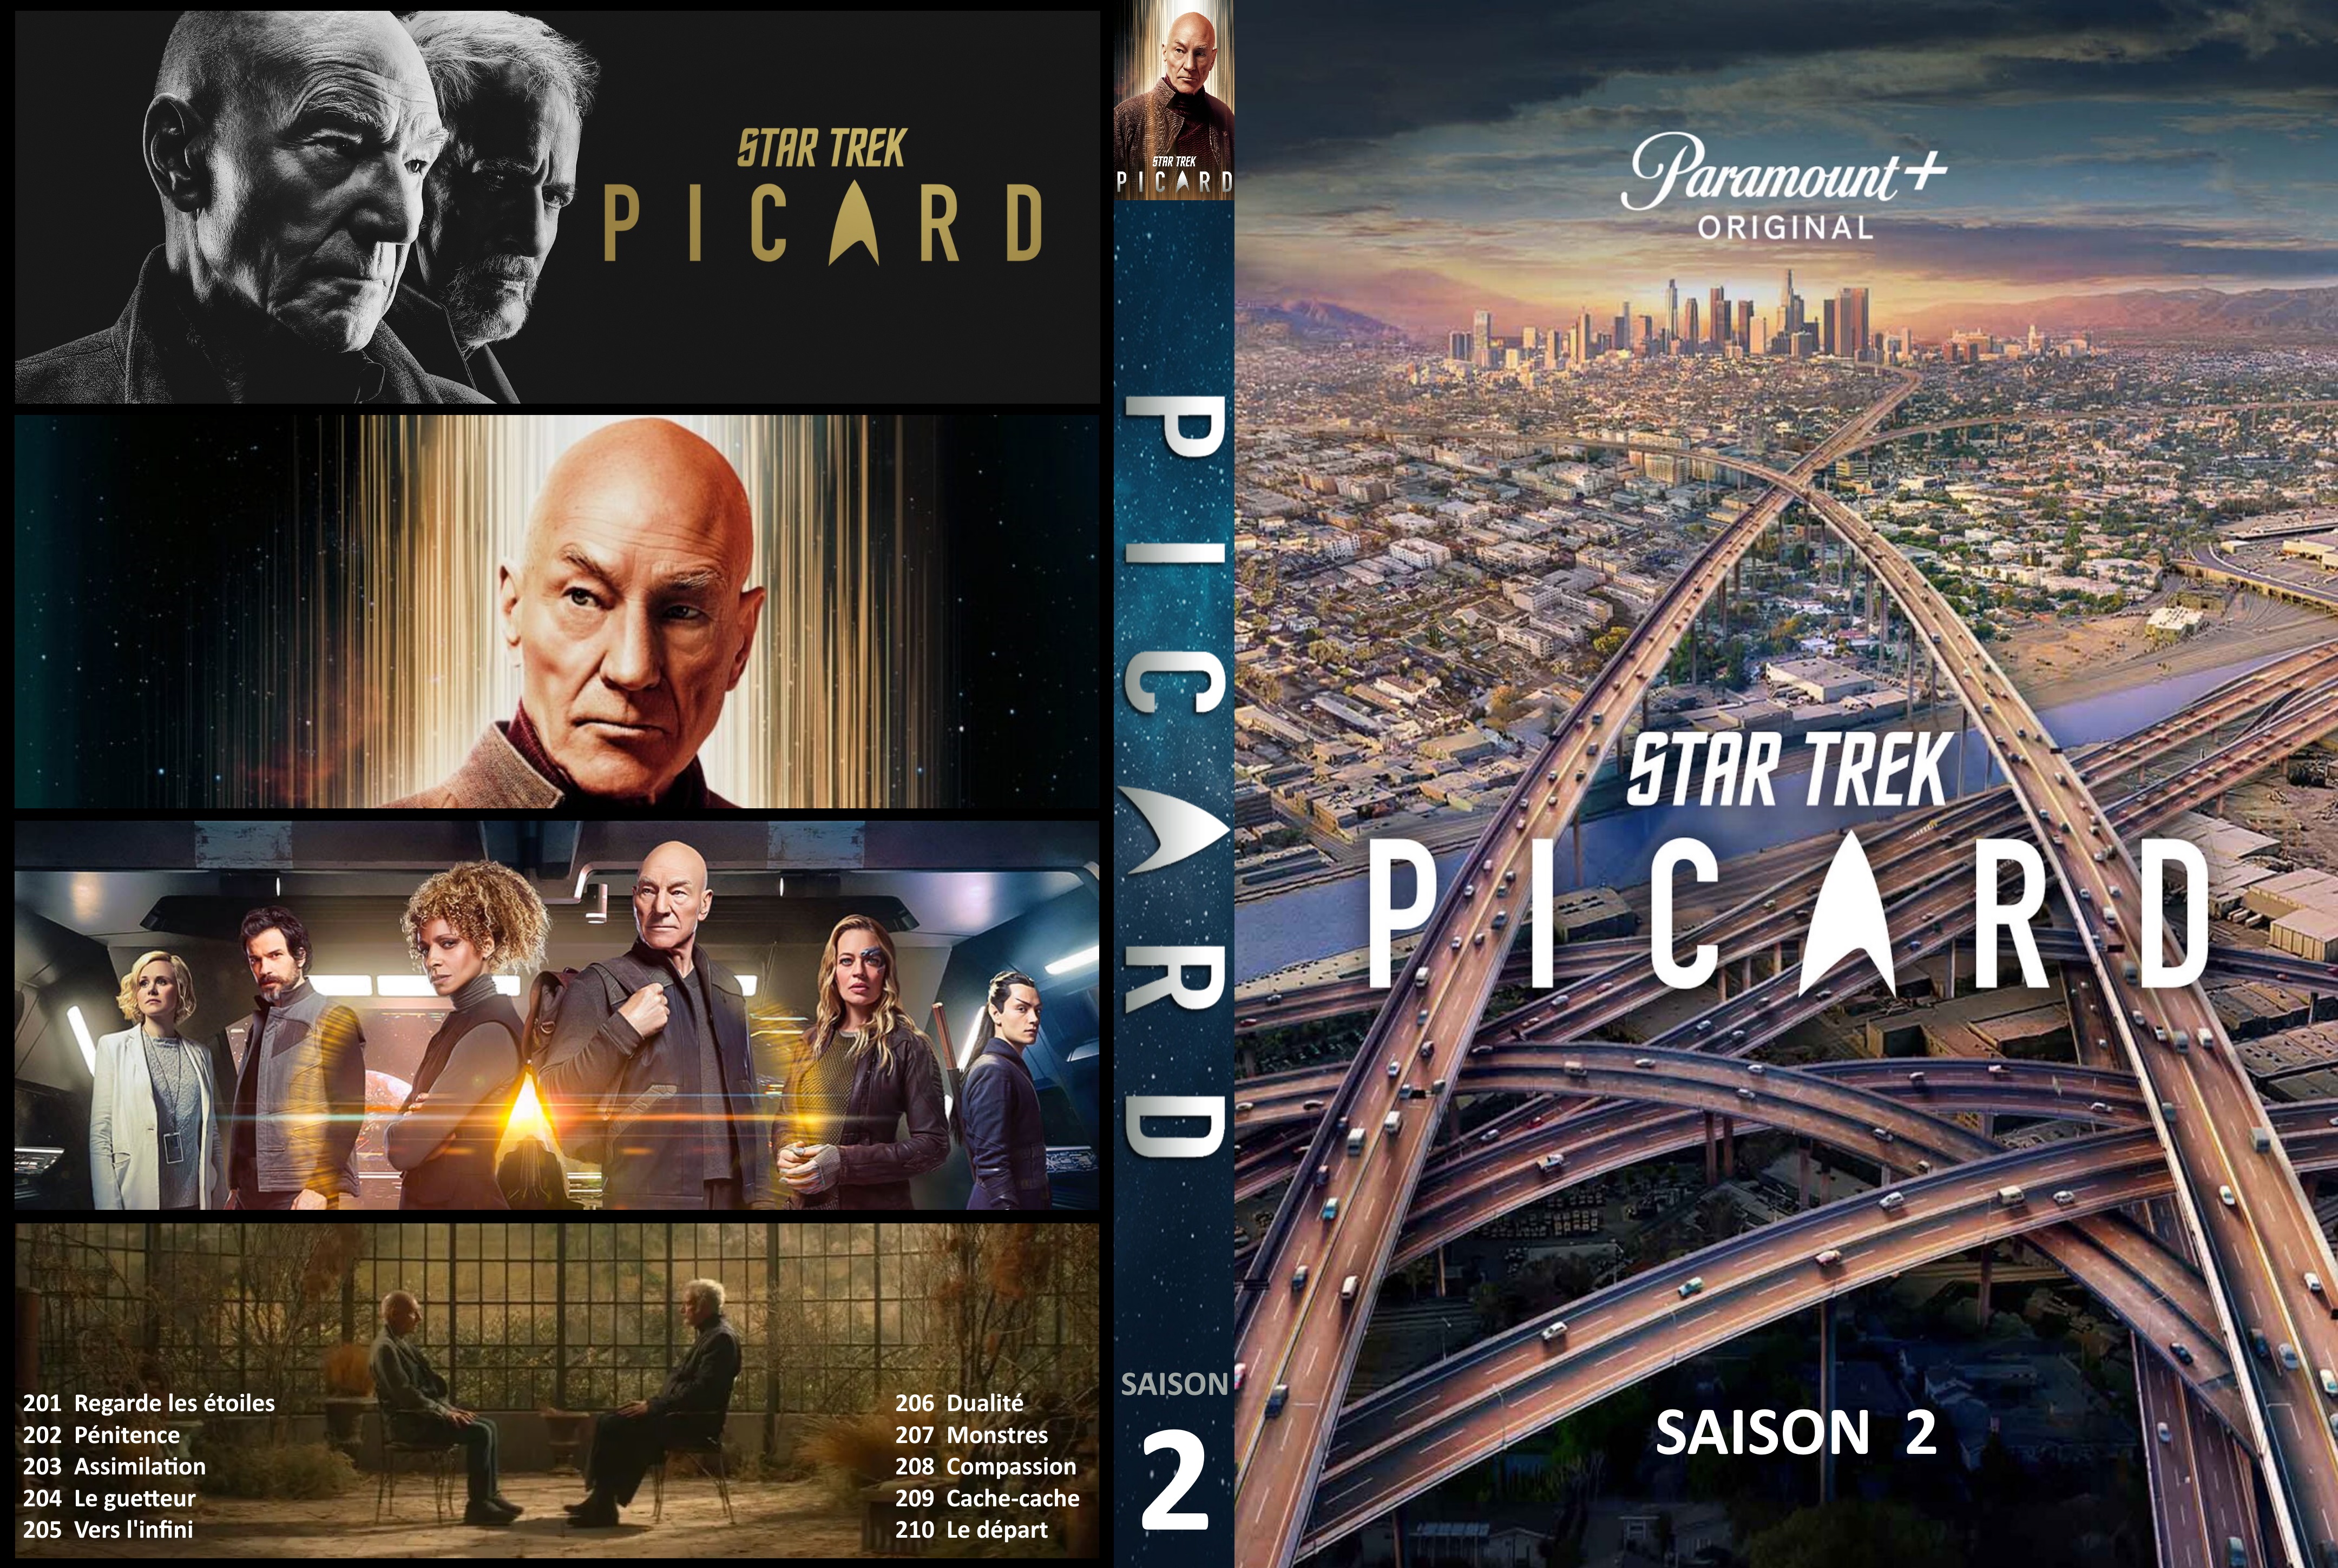 Jaquette DVD Star Trek Picard saison 2 custom